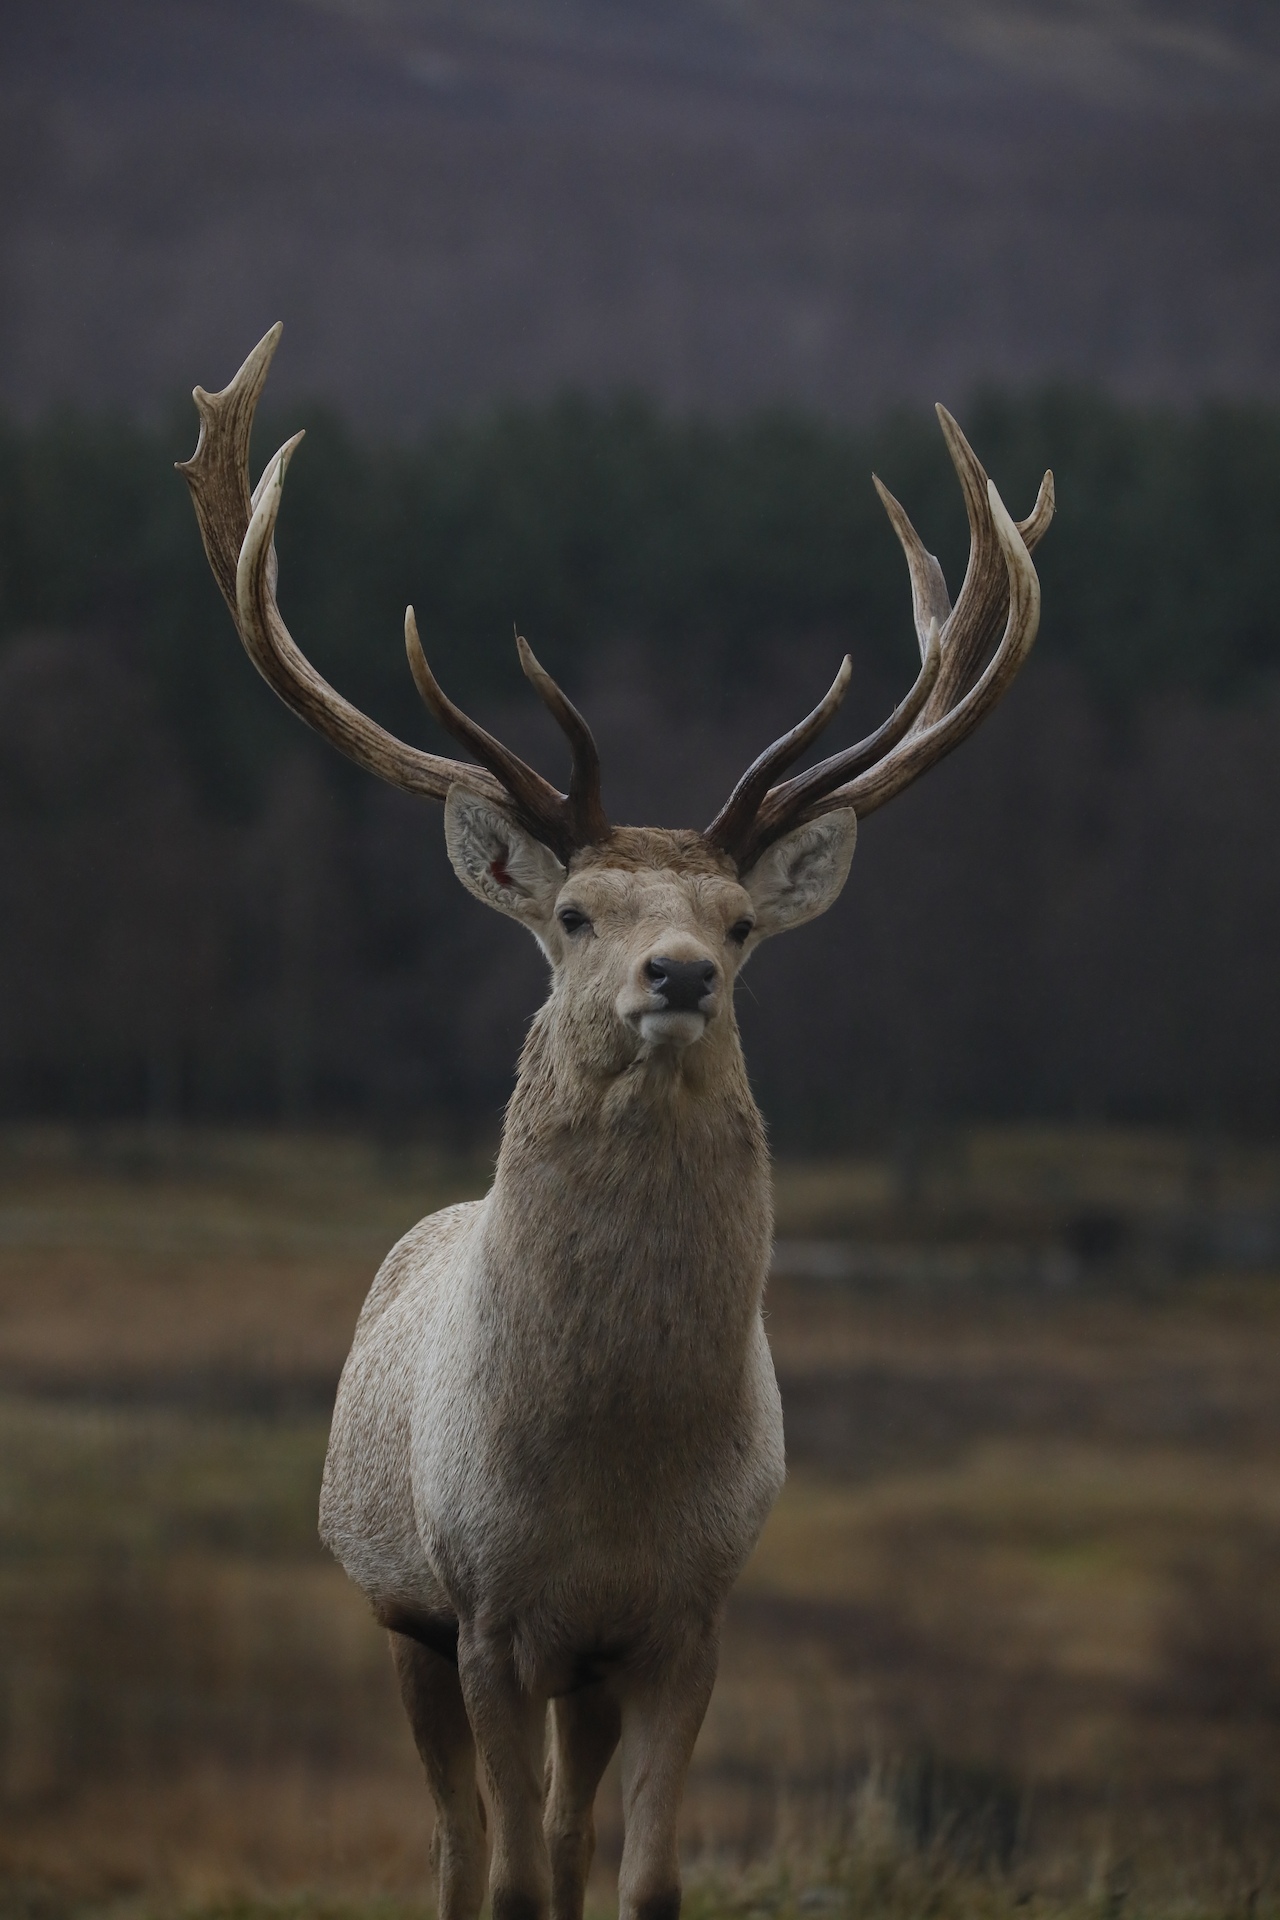 Bukhara deer face on looking toward camera, portrait

Image: AMY MIDDLETON 2023